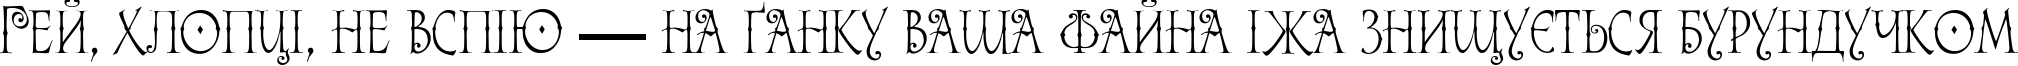 Пример написания шрифтом Alice текста на украинском